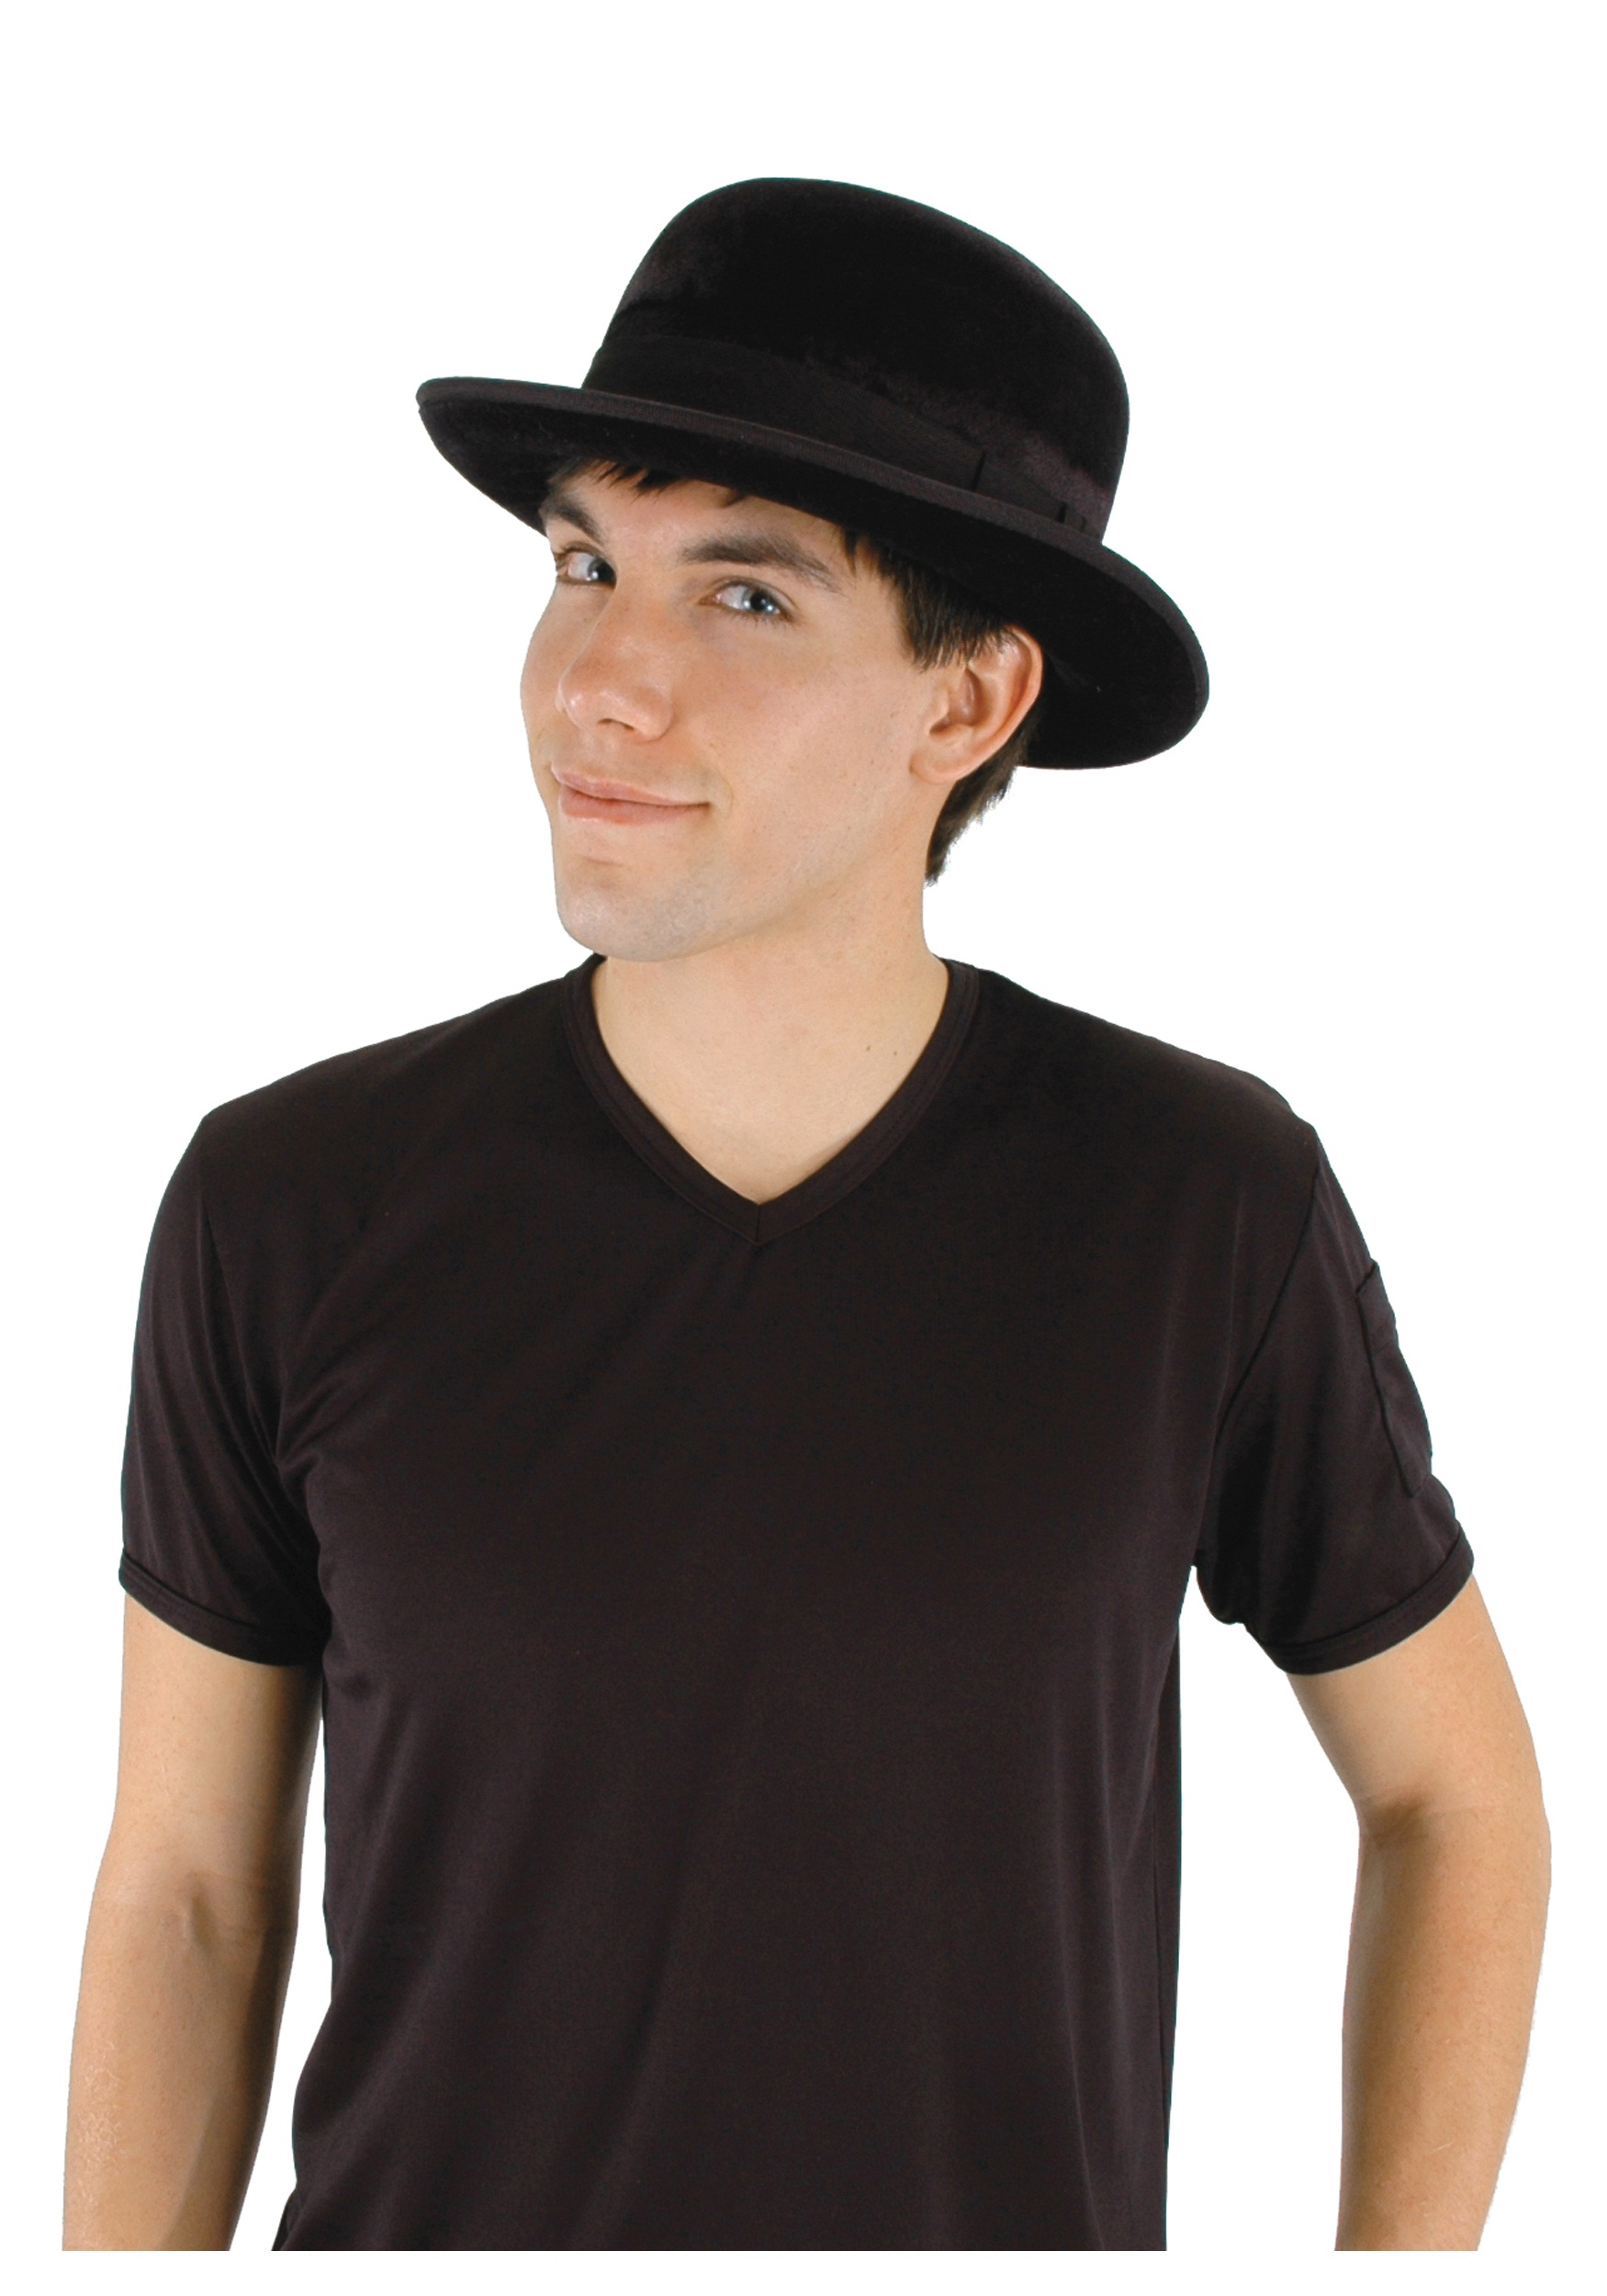 Men’s Black Velour Bowler Hat